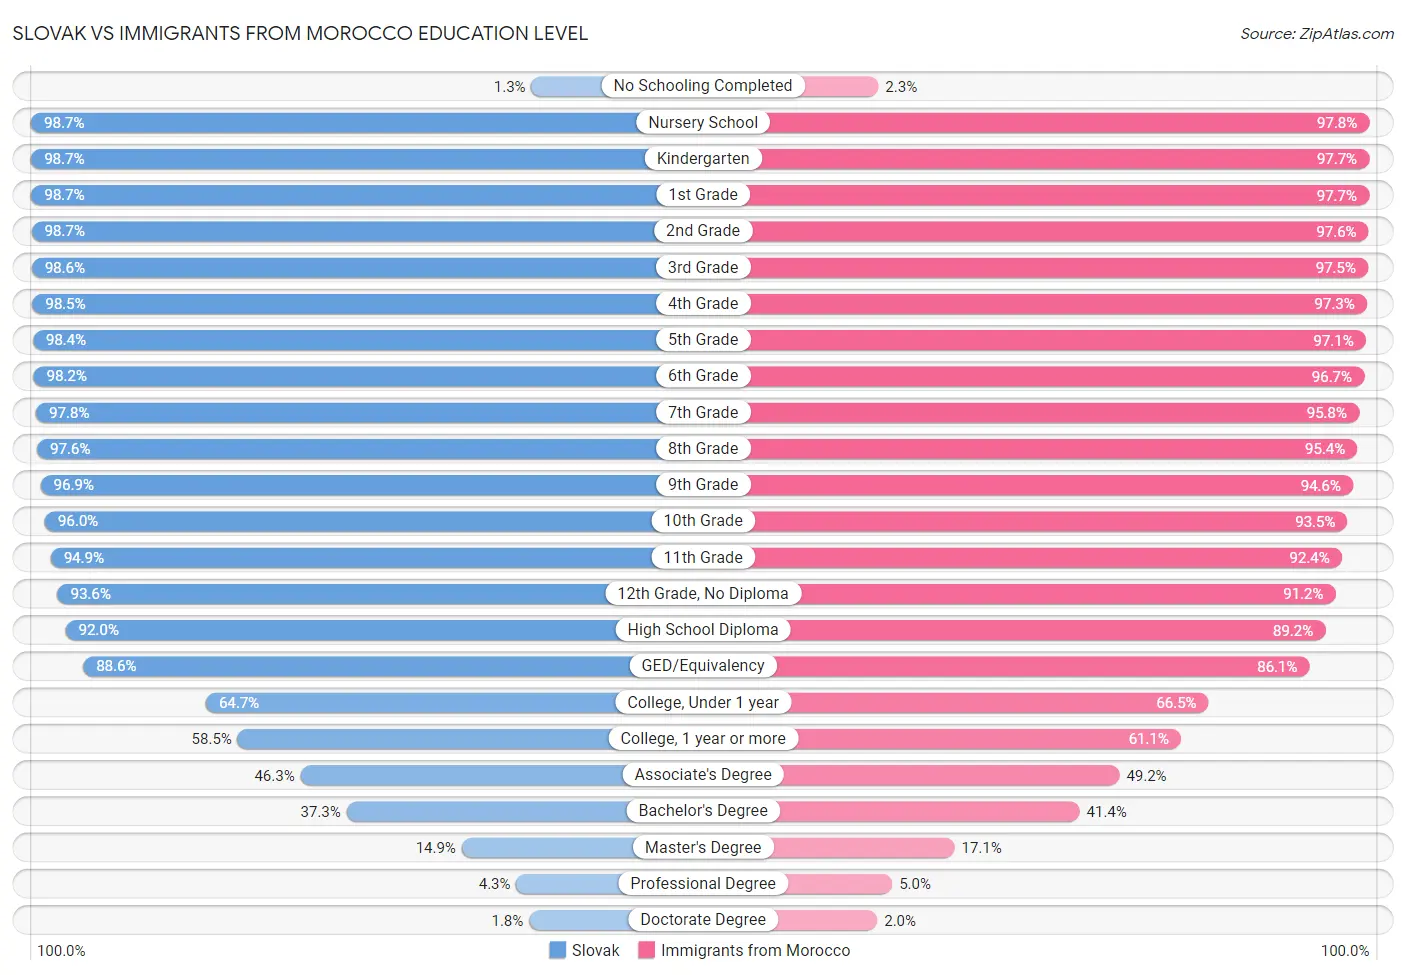 Slovak vs Immigrants from Morocco Education Level